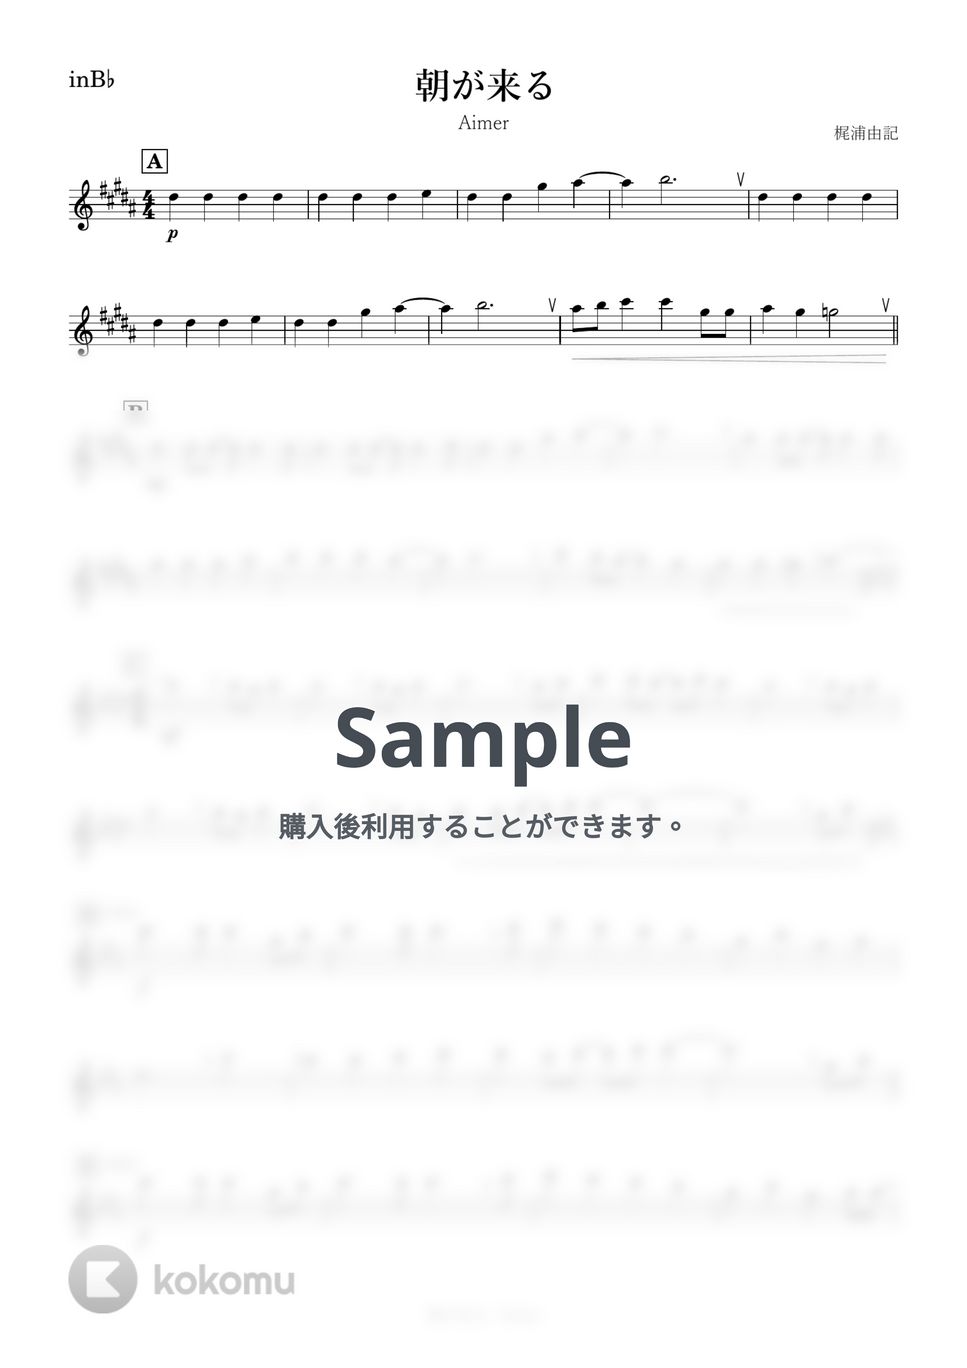 Aimer - 【鬼滅の刃】朝が来る (B♭) by kanamusic